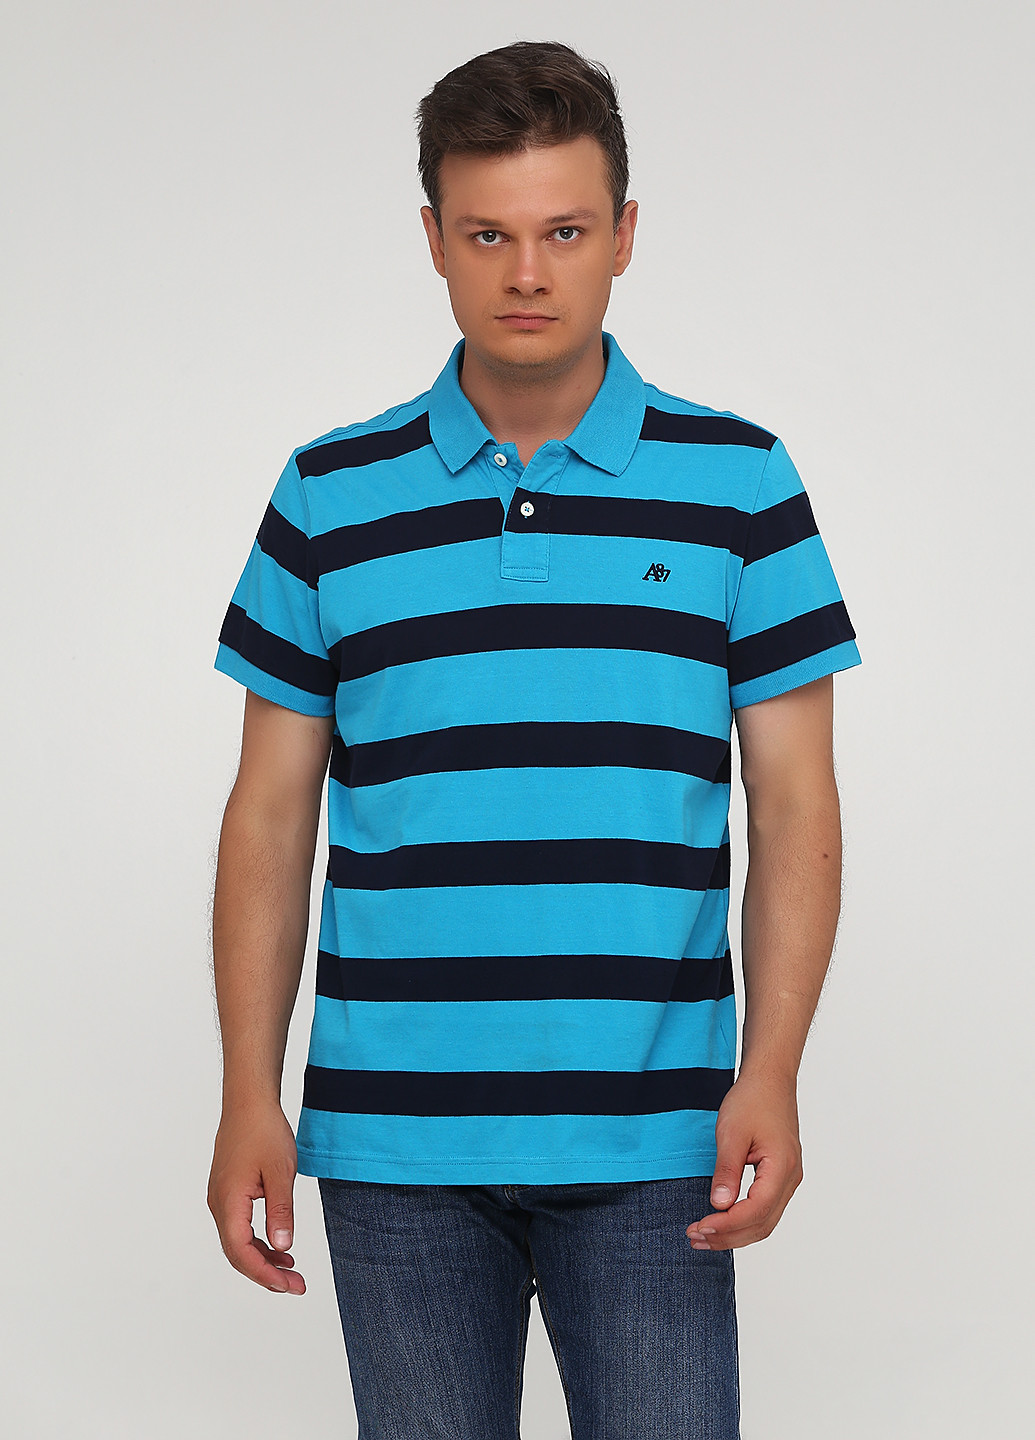 Темно-голубой футболка-поло для мужчин Aeropostale в полоску